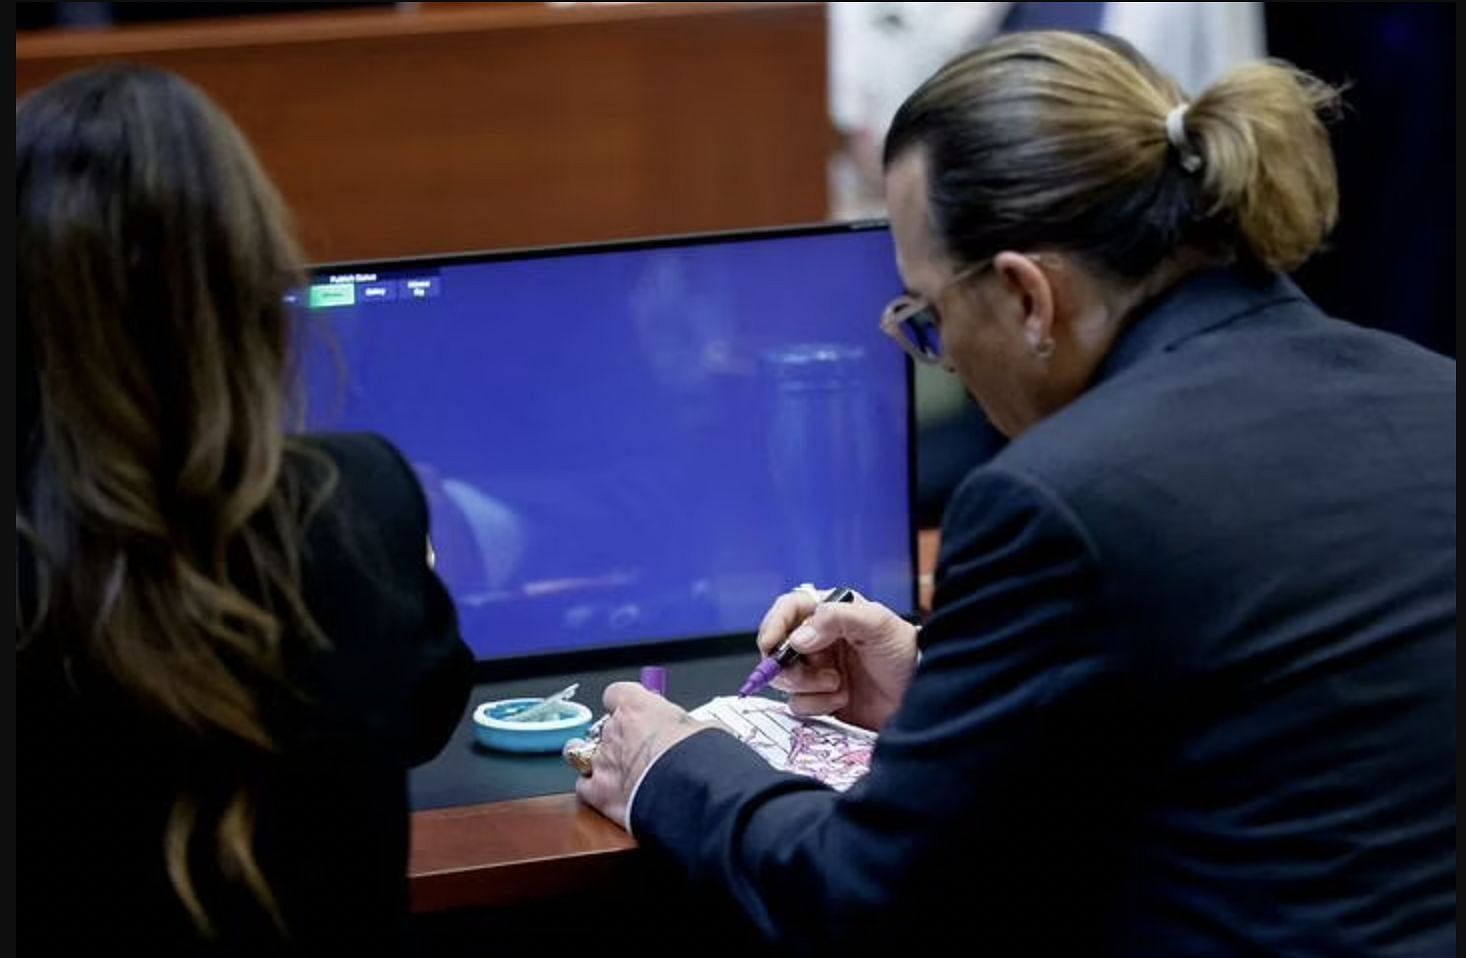 Johnny Depp seen doodling in the courtroom (Image via Twitter)